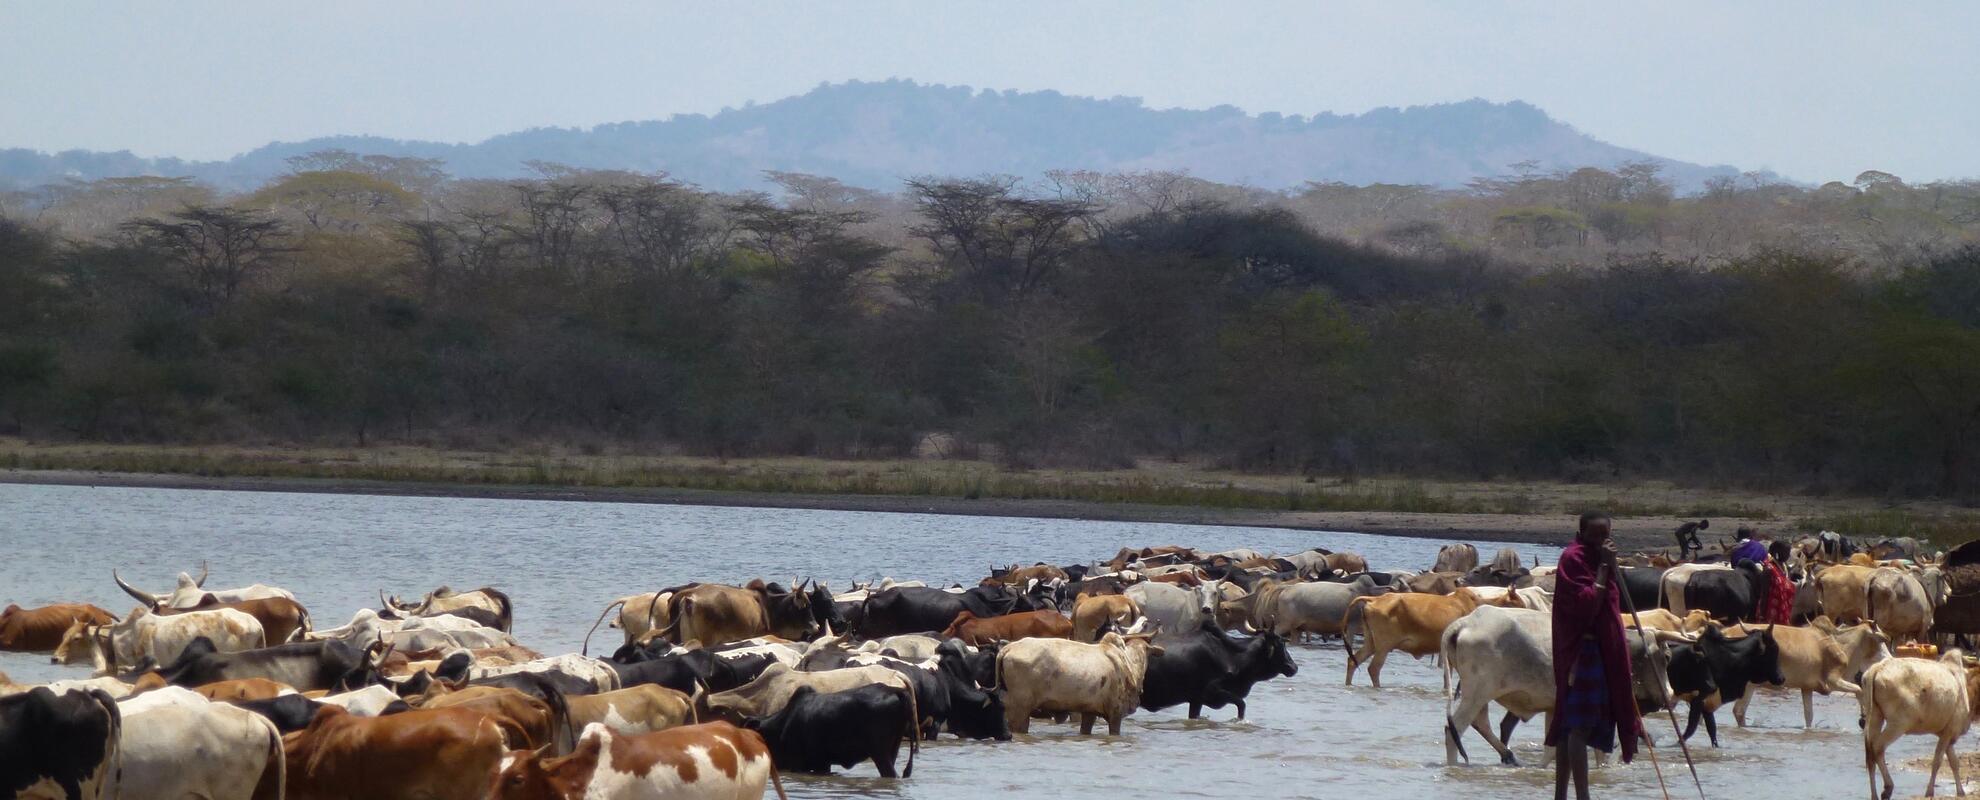 A Maasai pastoralist taking livestock to drink from the Olkitikiti Dam